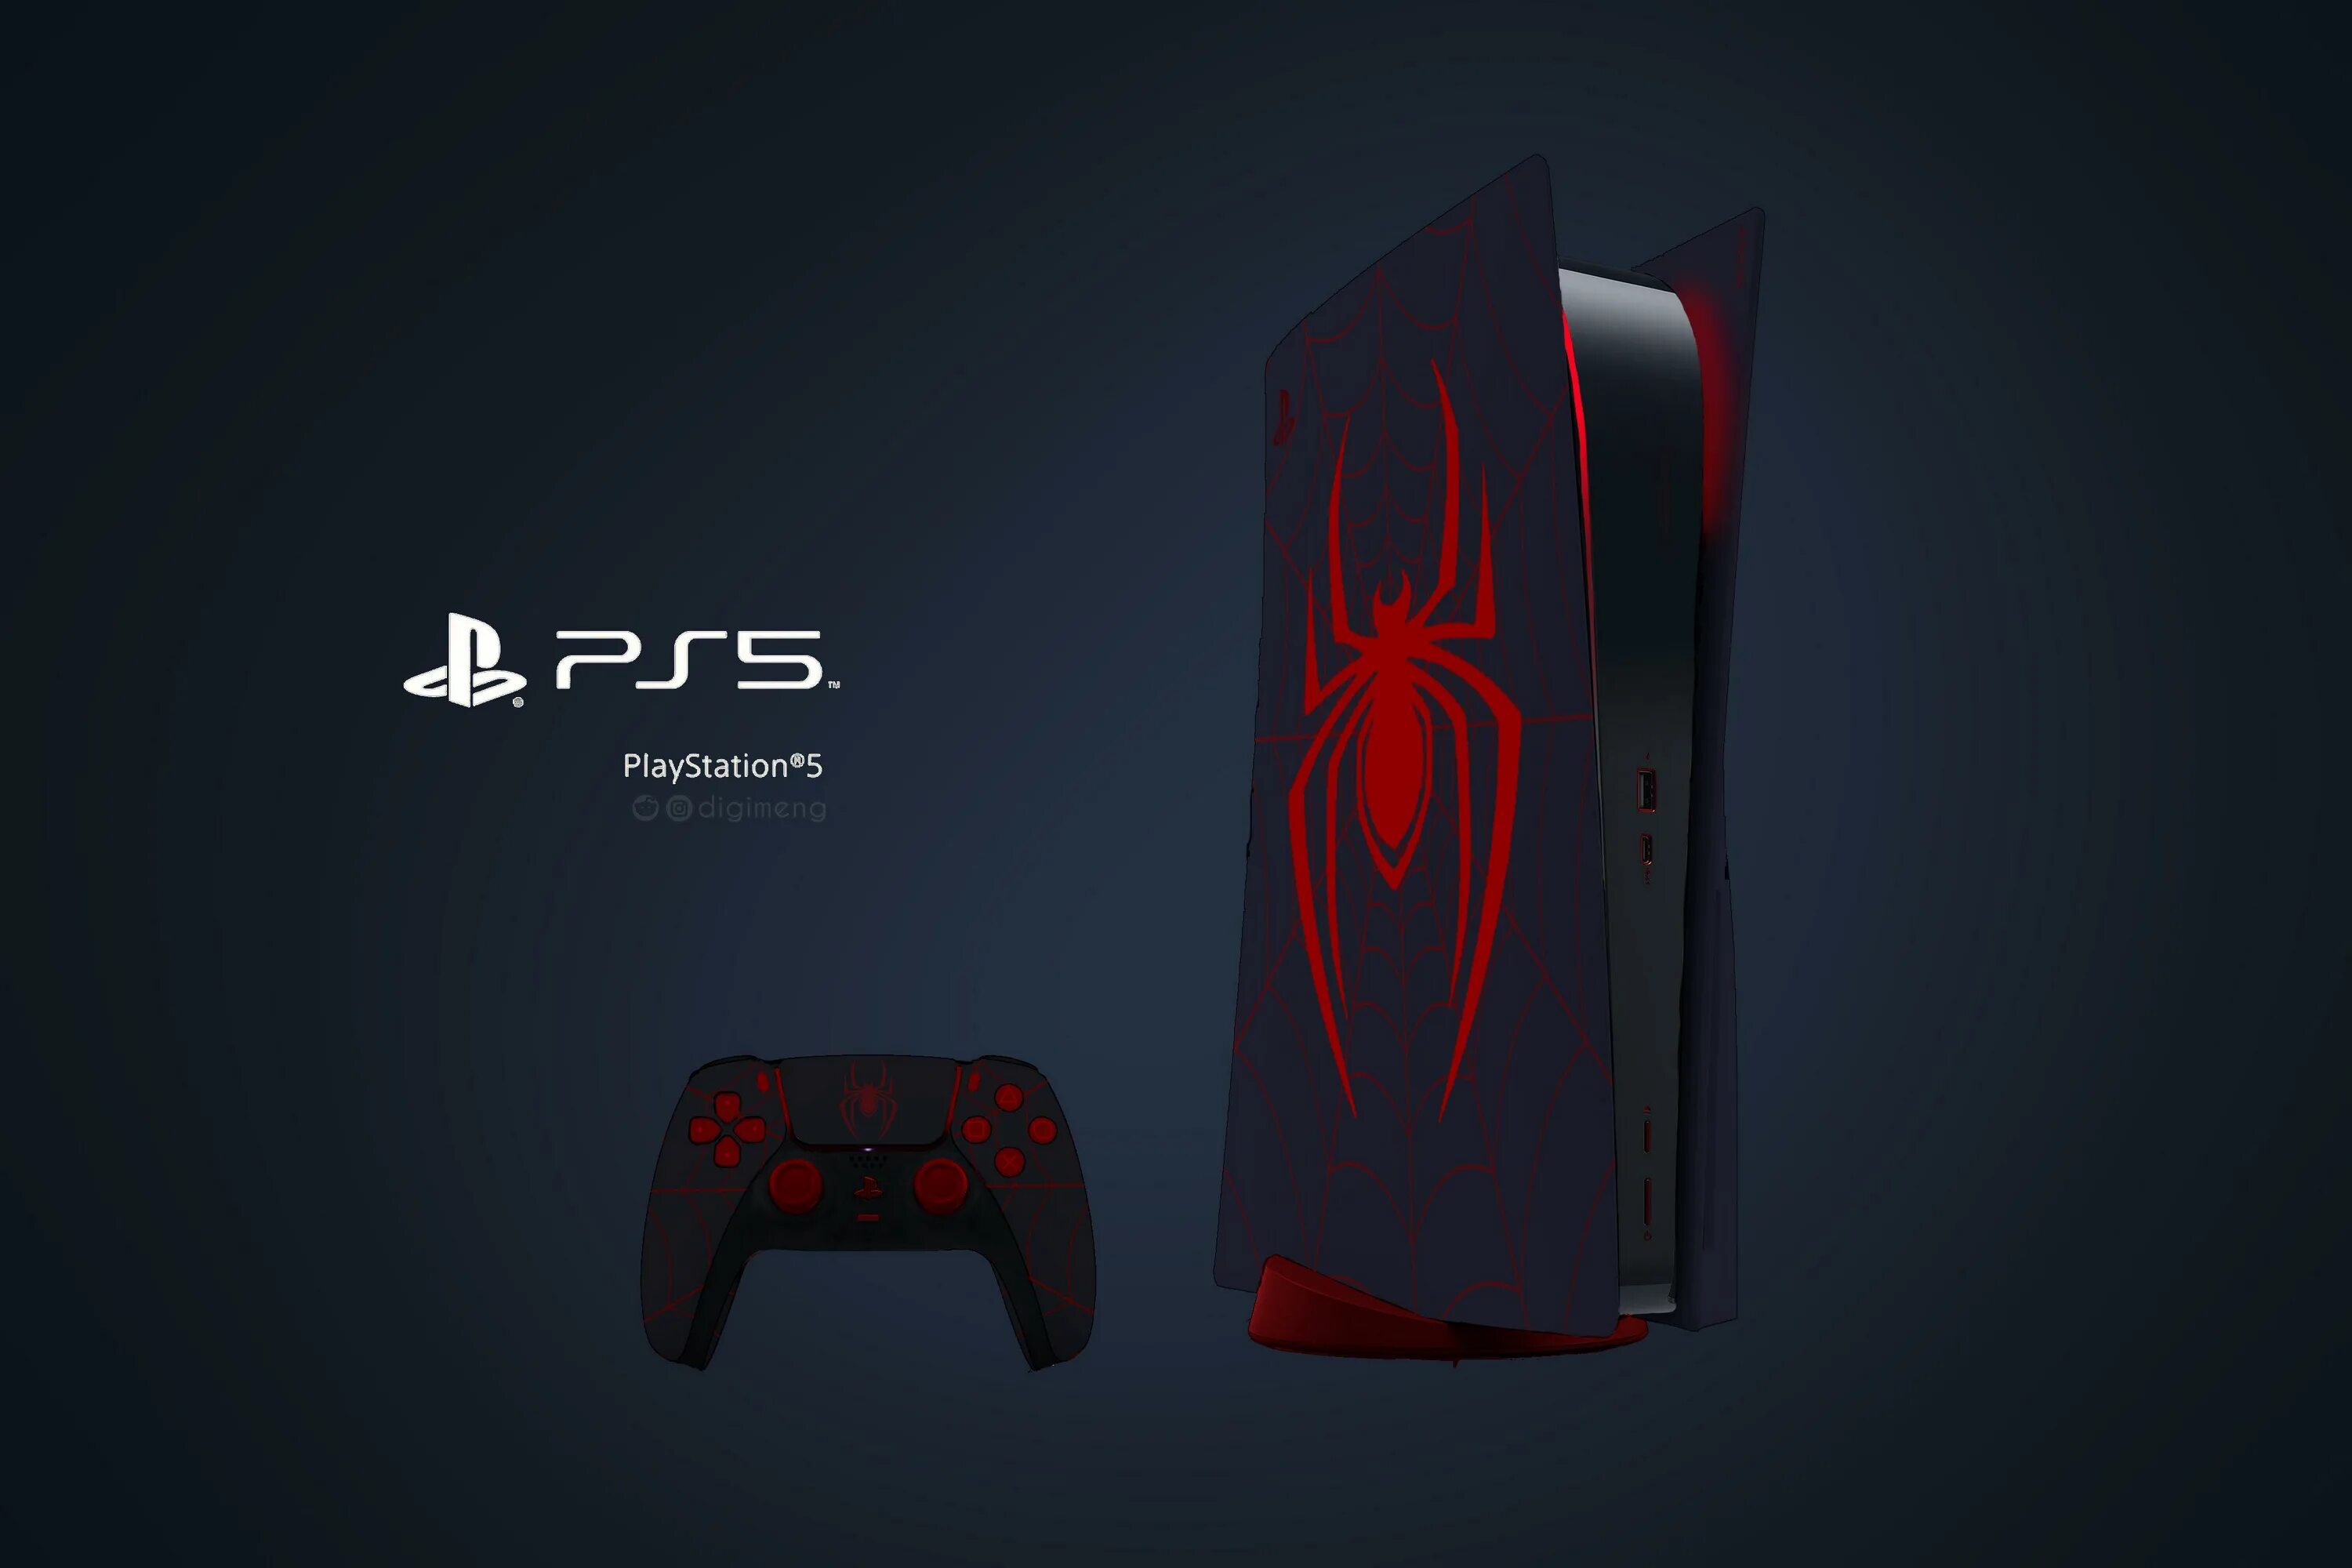 Ps5 bundle. Sony PLAYSTATION 5 Spider man Edition. Ps5 Limited Edition Spider man. Ps5 Spider man Miles morales Edition. Sony PLAYSTATION 5 Limited Edition Spider man.